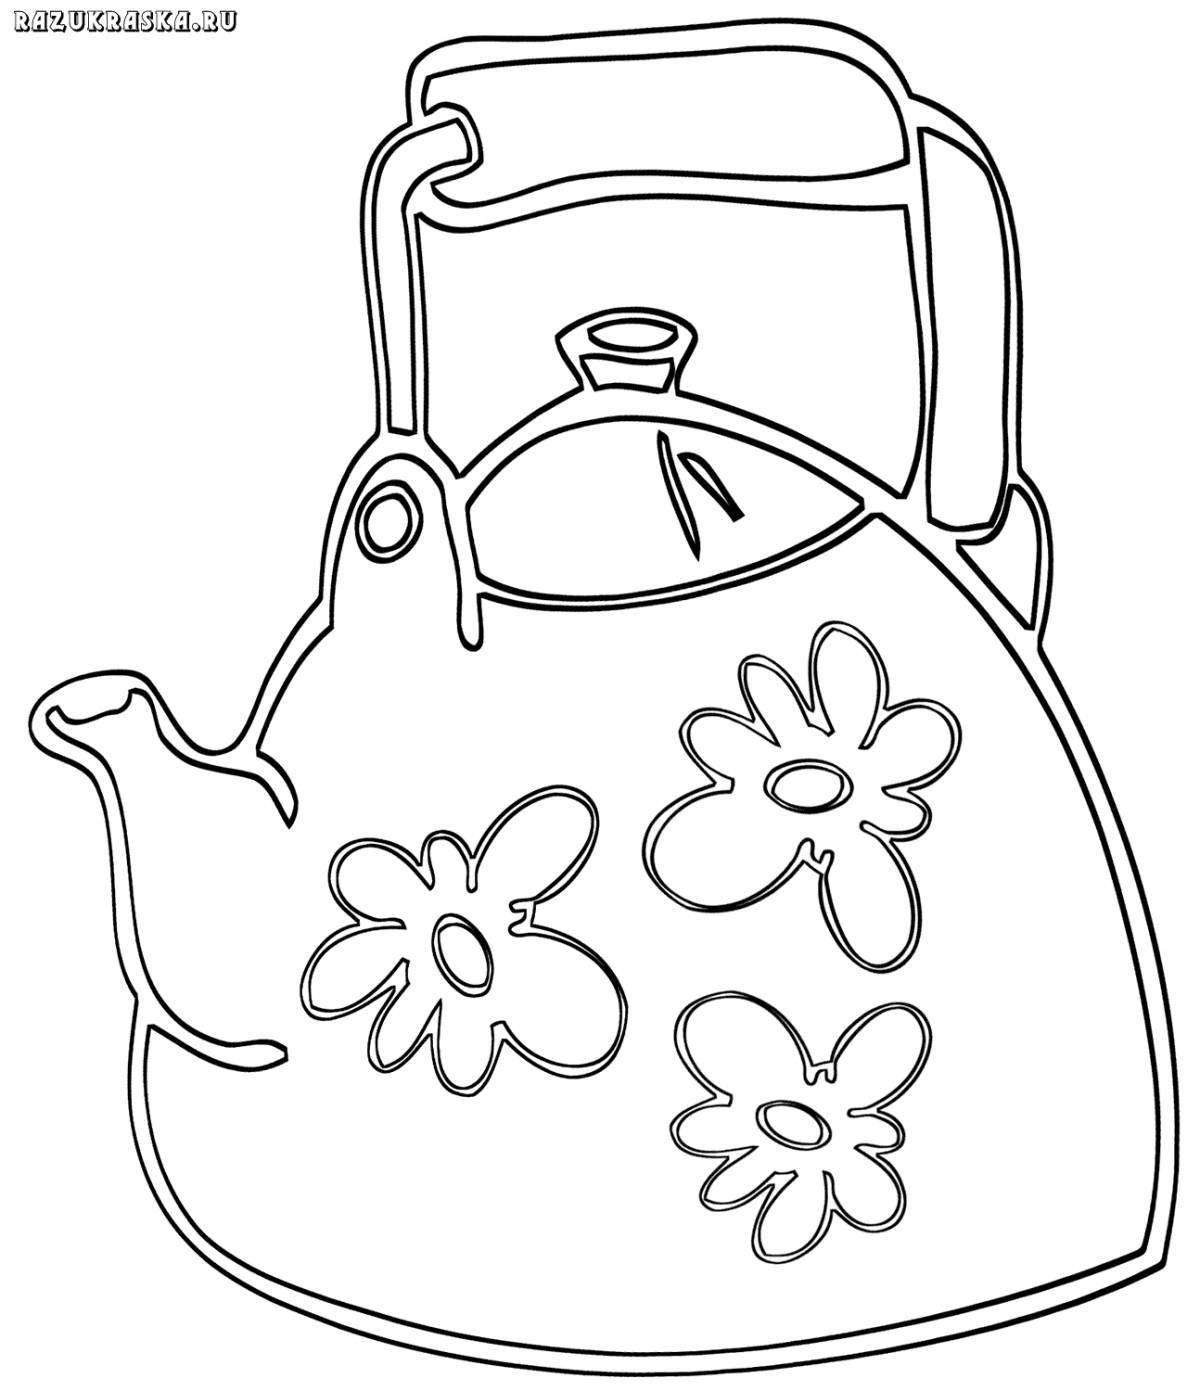 Children's dainty teapot coloring book